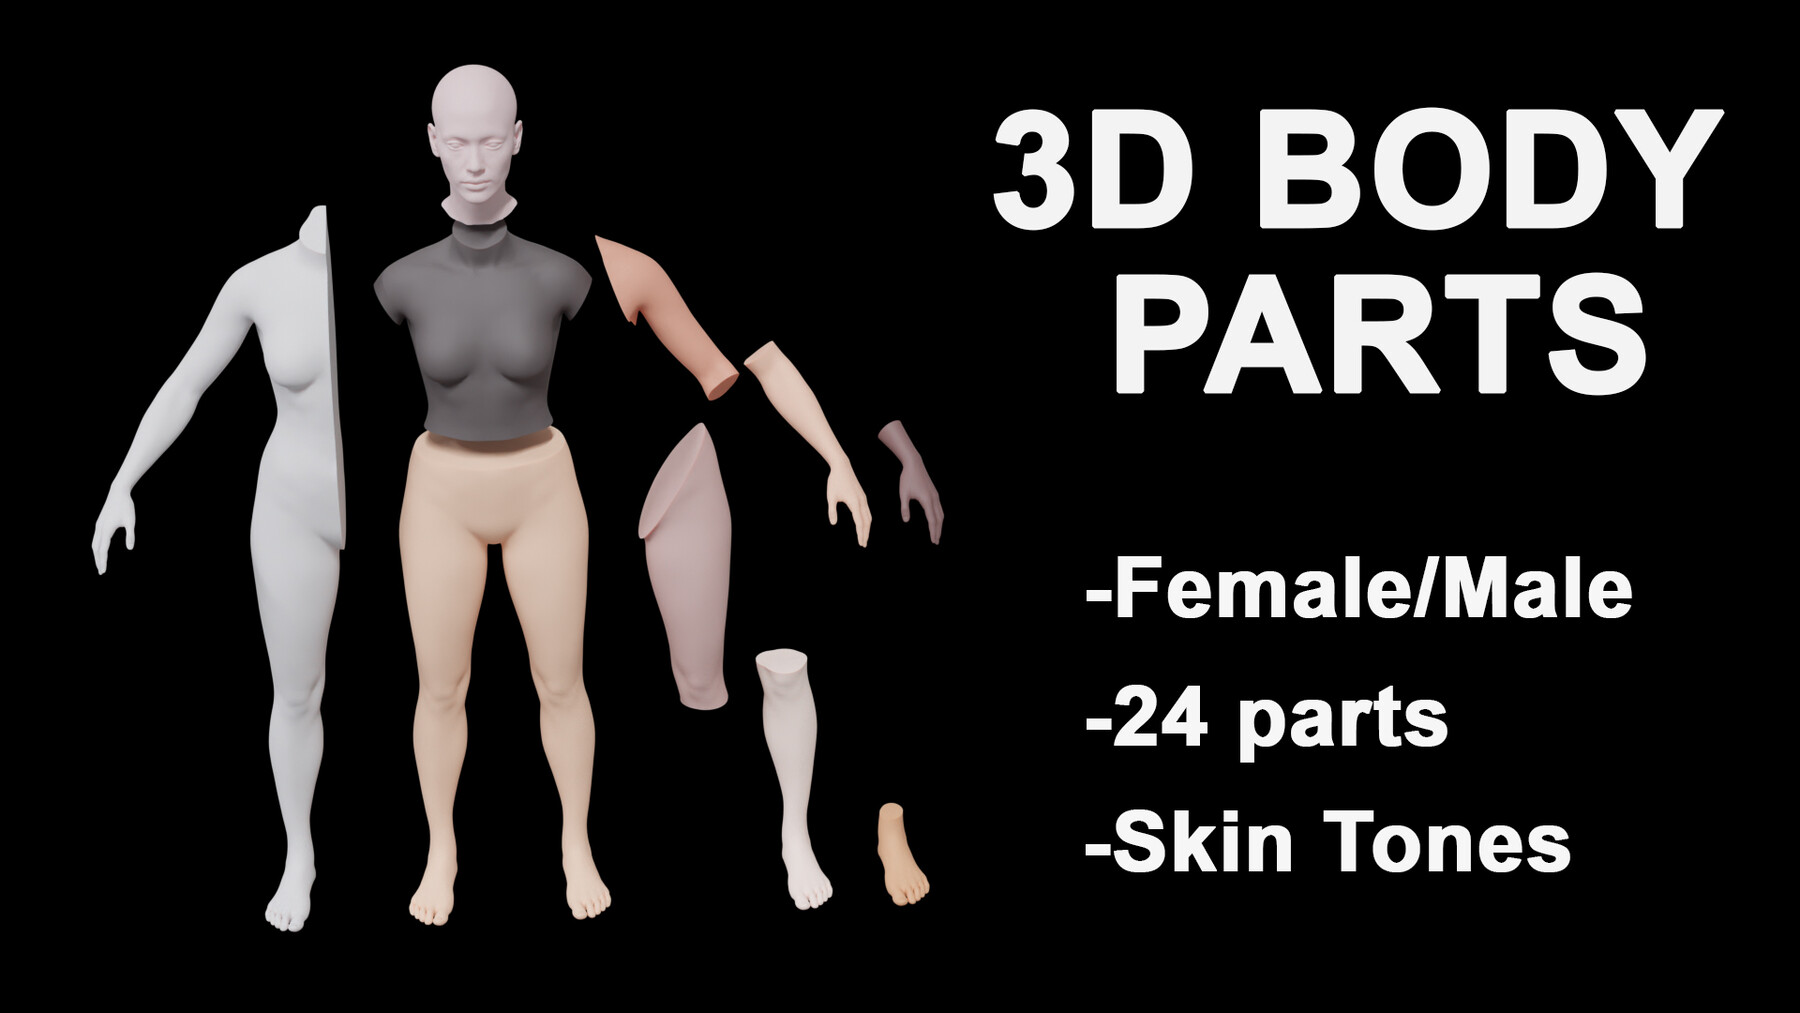 procreate 3d body parts free